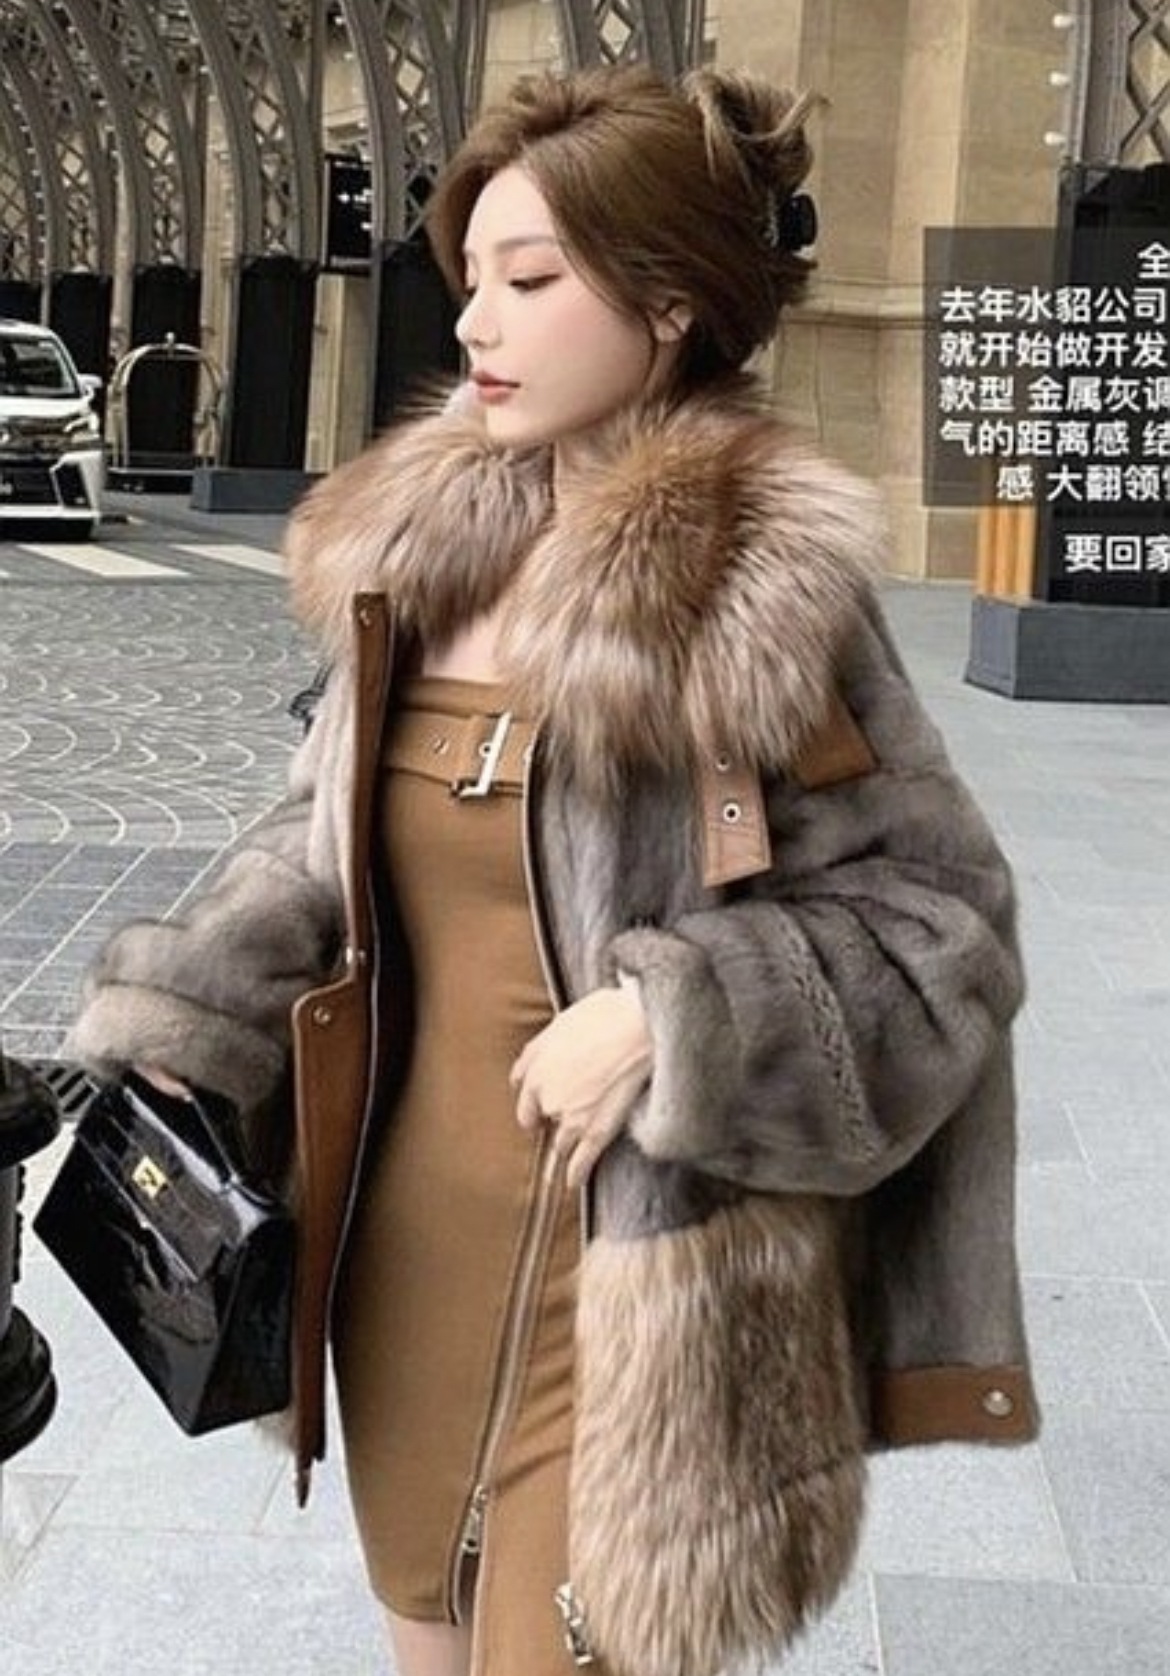 Cute Asian girl in fur coat by maiomaiomaio on DeviantArt